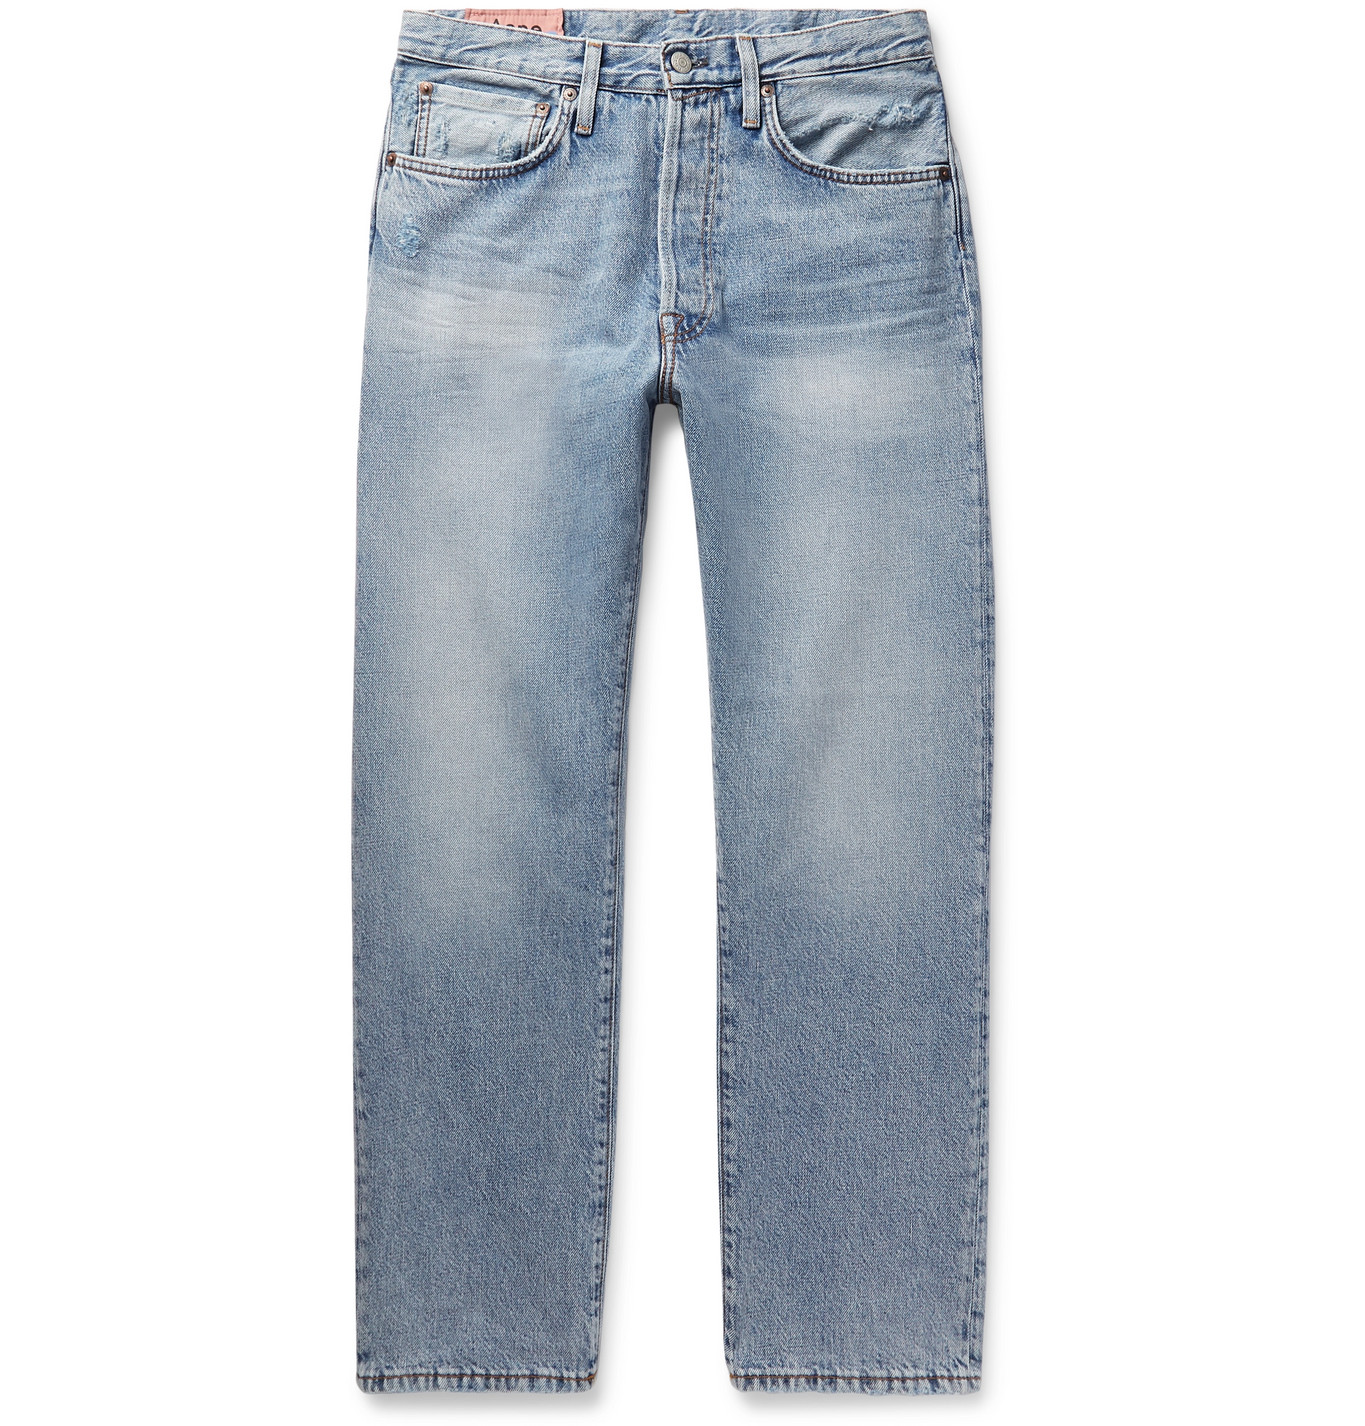 Acne Studios - Distressed Denim Jeans - Men - Blue | The Fashionisto